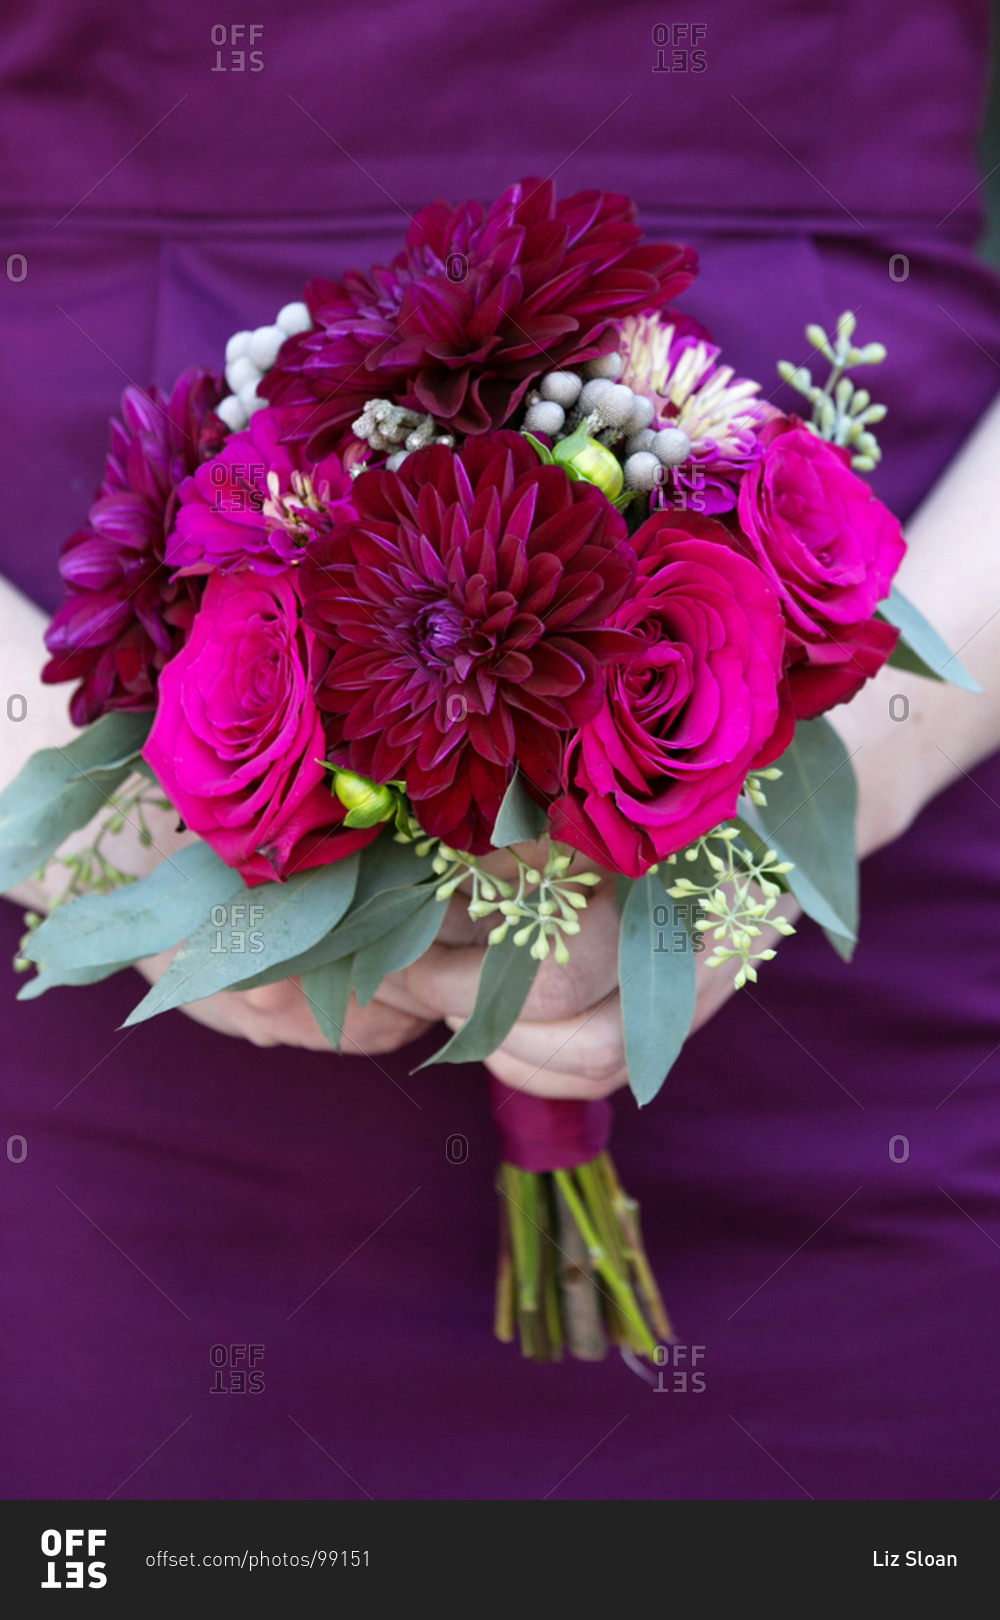 Bridesmaid holding a purple wedding bouquet